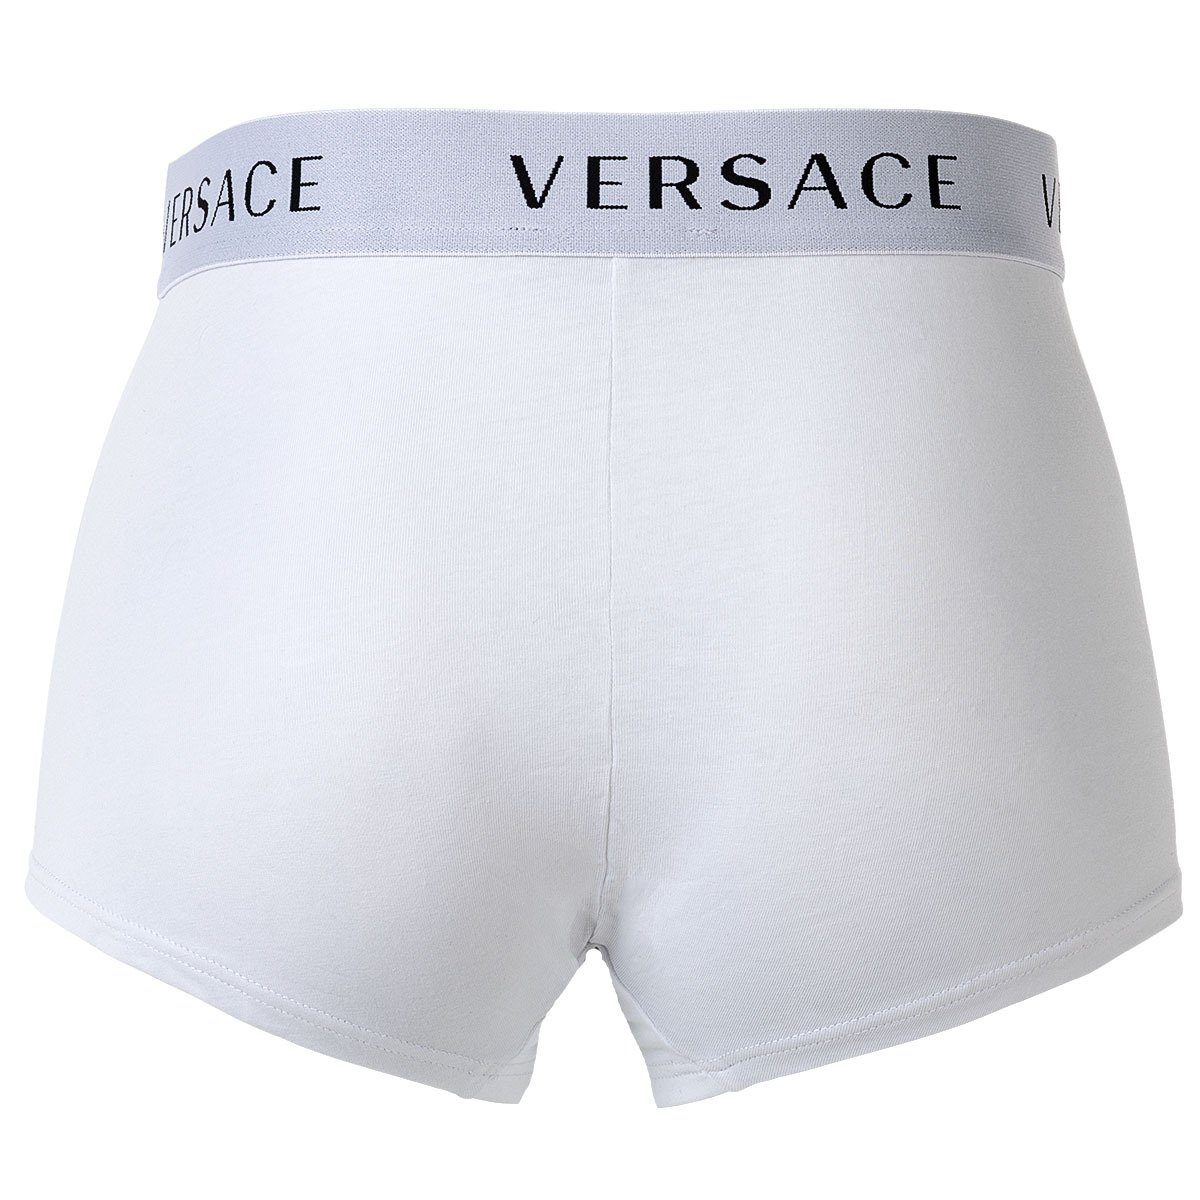 Versace Boxer Herren Boxer Trunk - 2er Weiß/Blau Pack Shorts